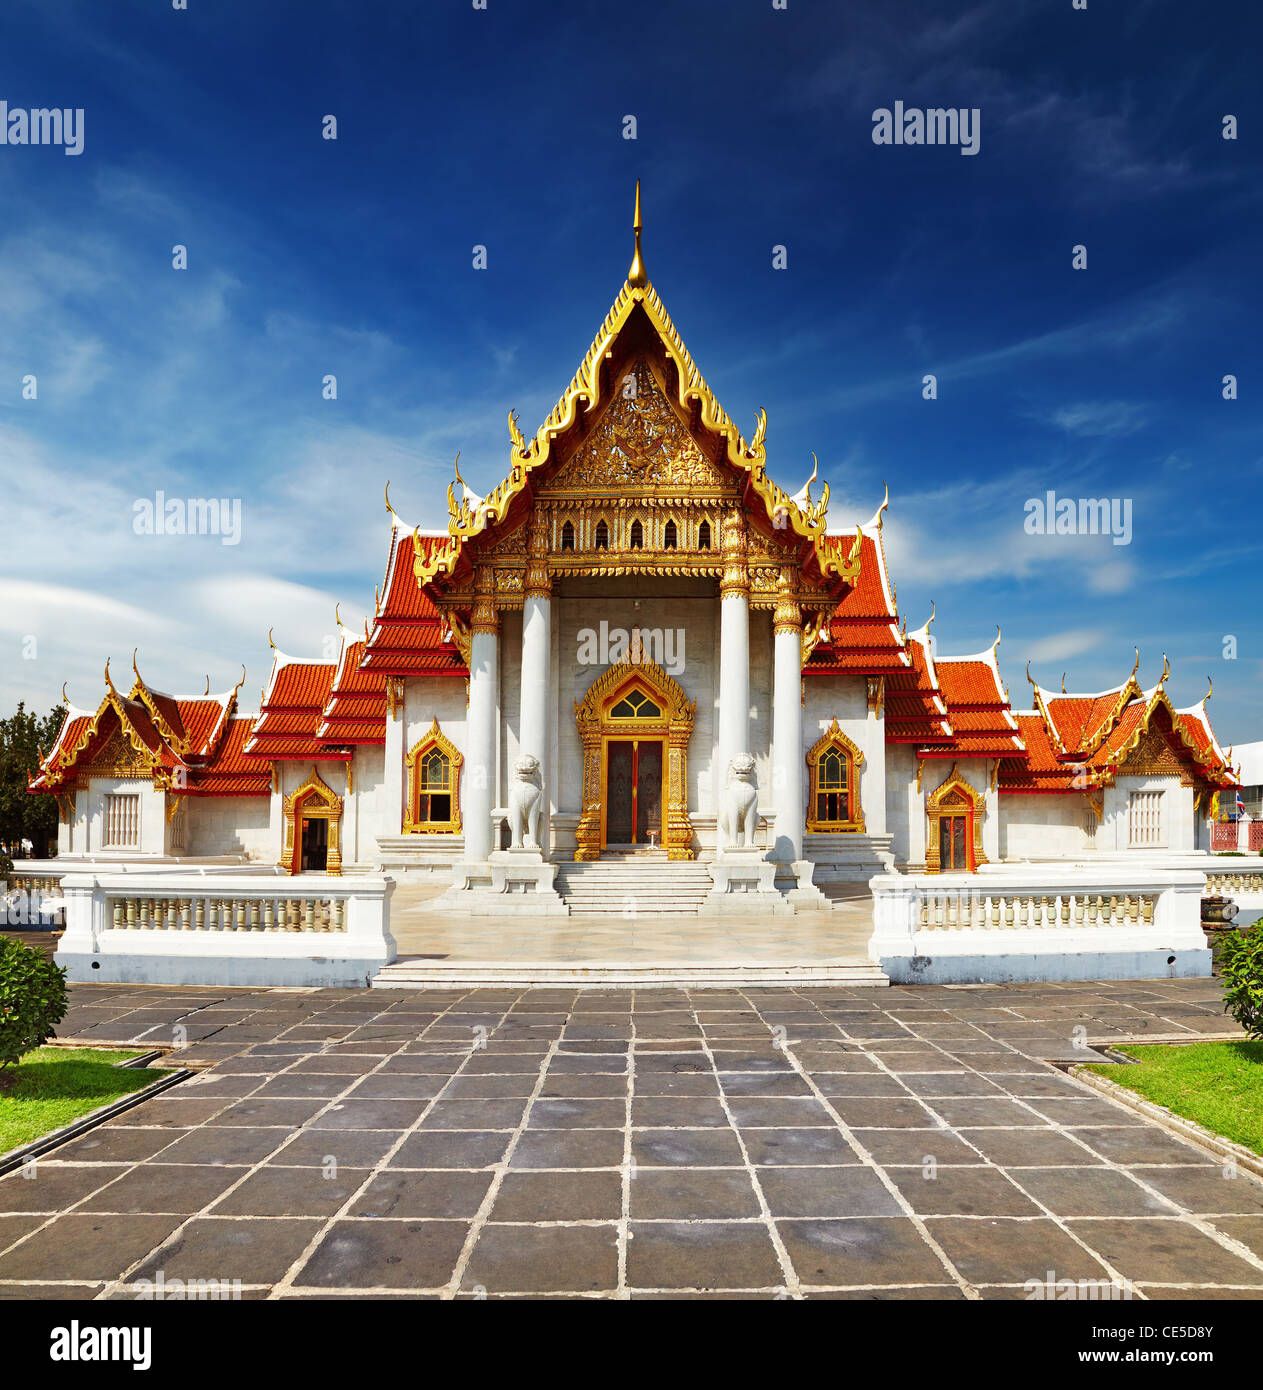 Architettura tradizionale thailandese, Wat Benjamaborphit o tempio in marmo, Bangkok Foto Stock